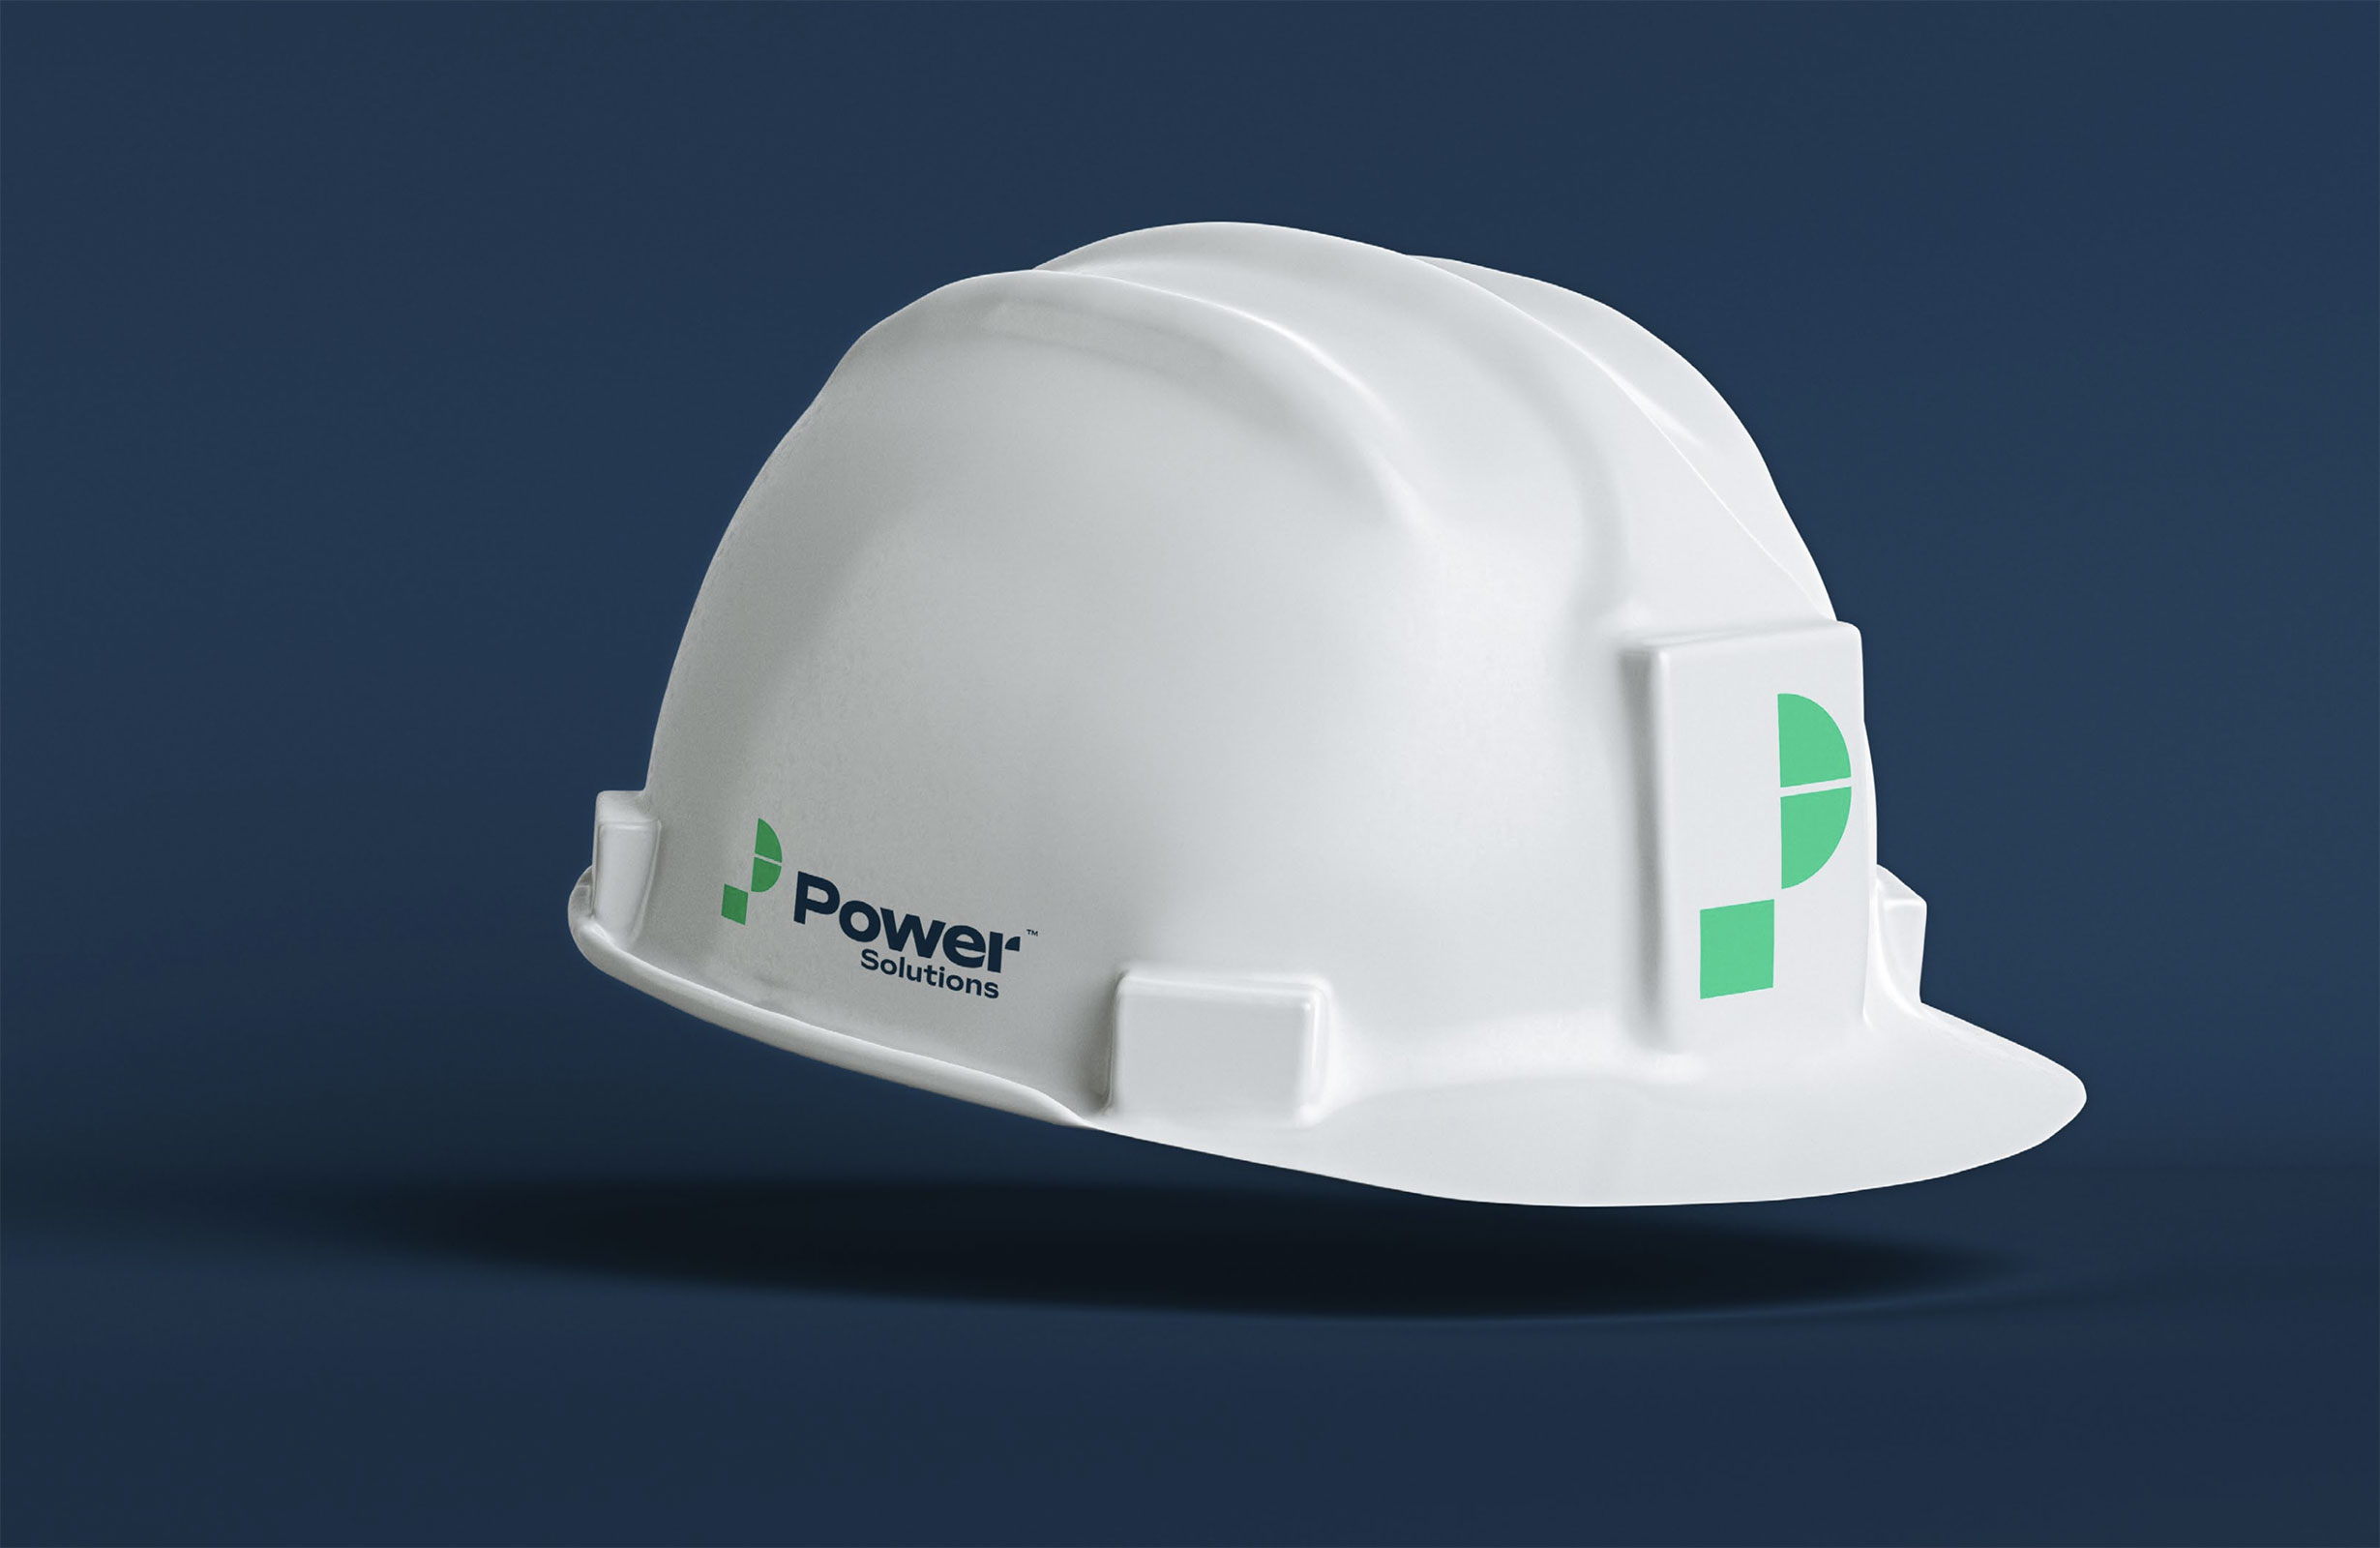 Power Solutions brand identity